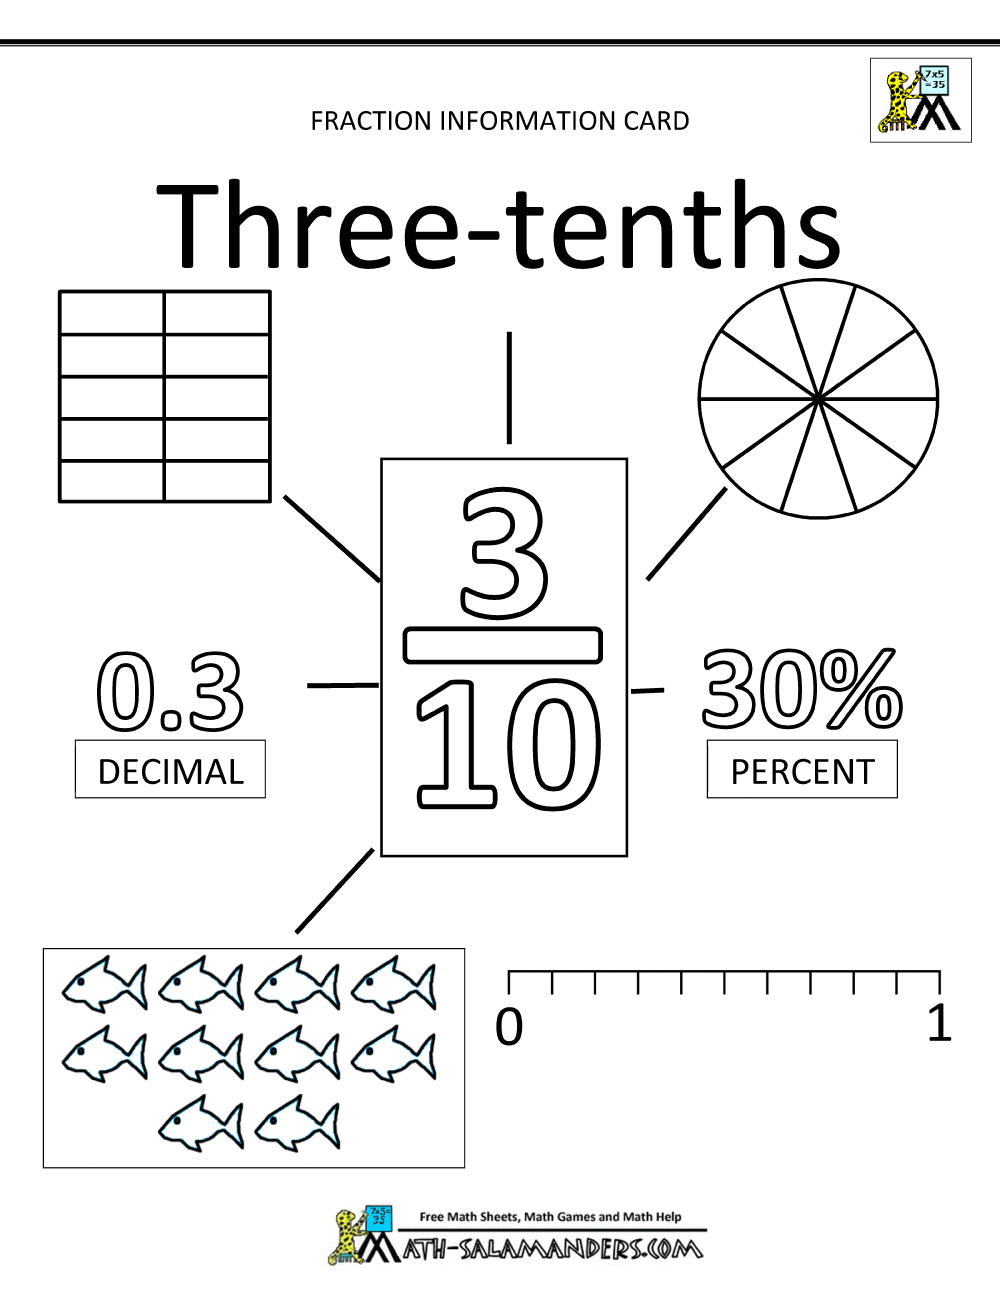 fractions decimals percents - fractions information cards (tenths)